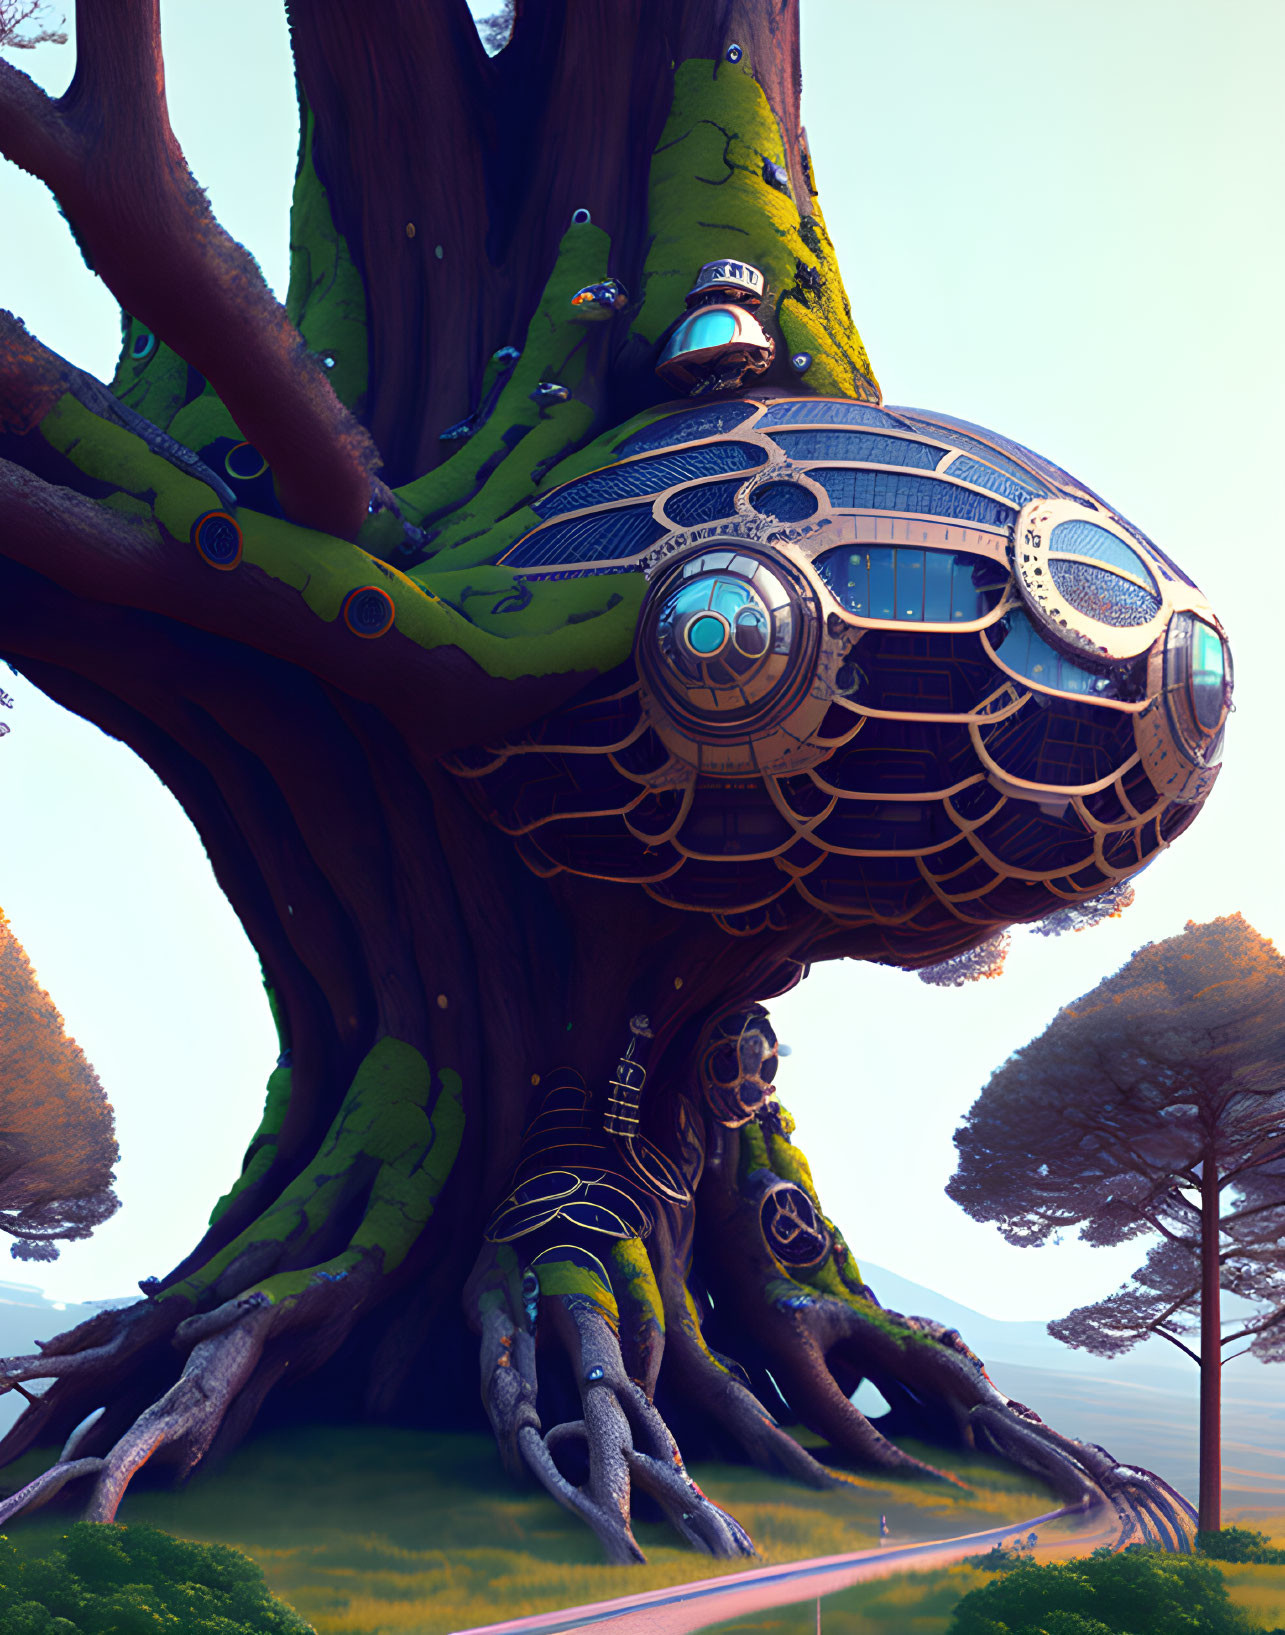 Futuristic spherical structure in fantastical tree landscape